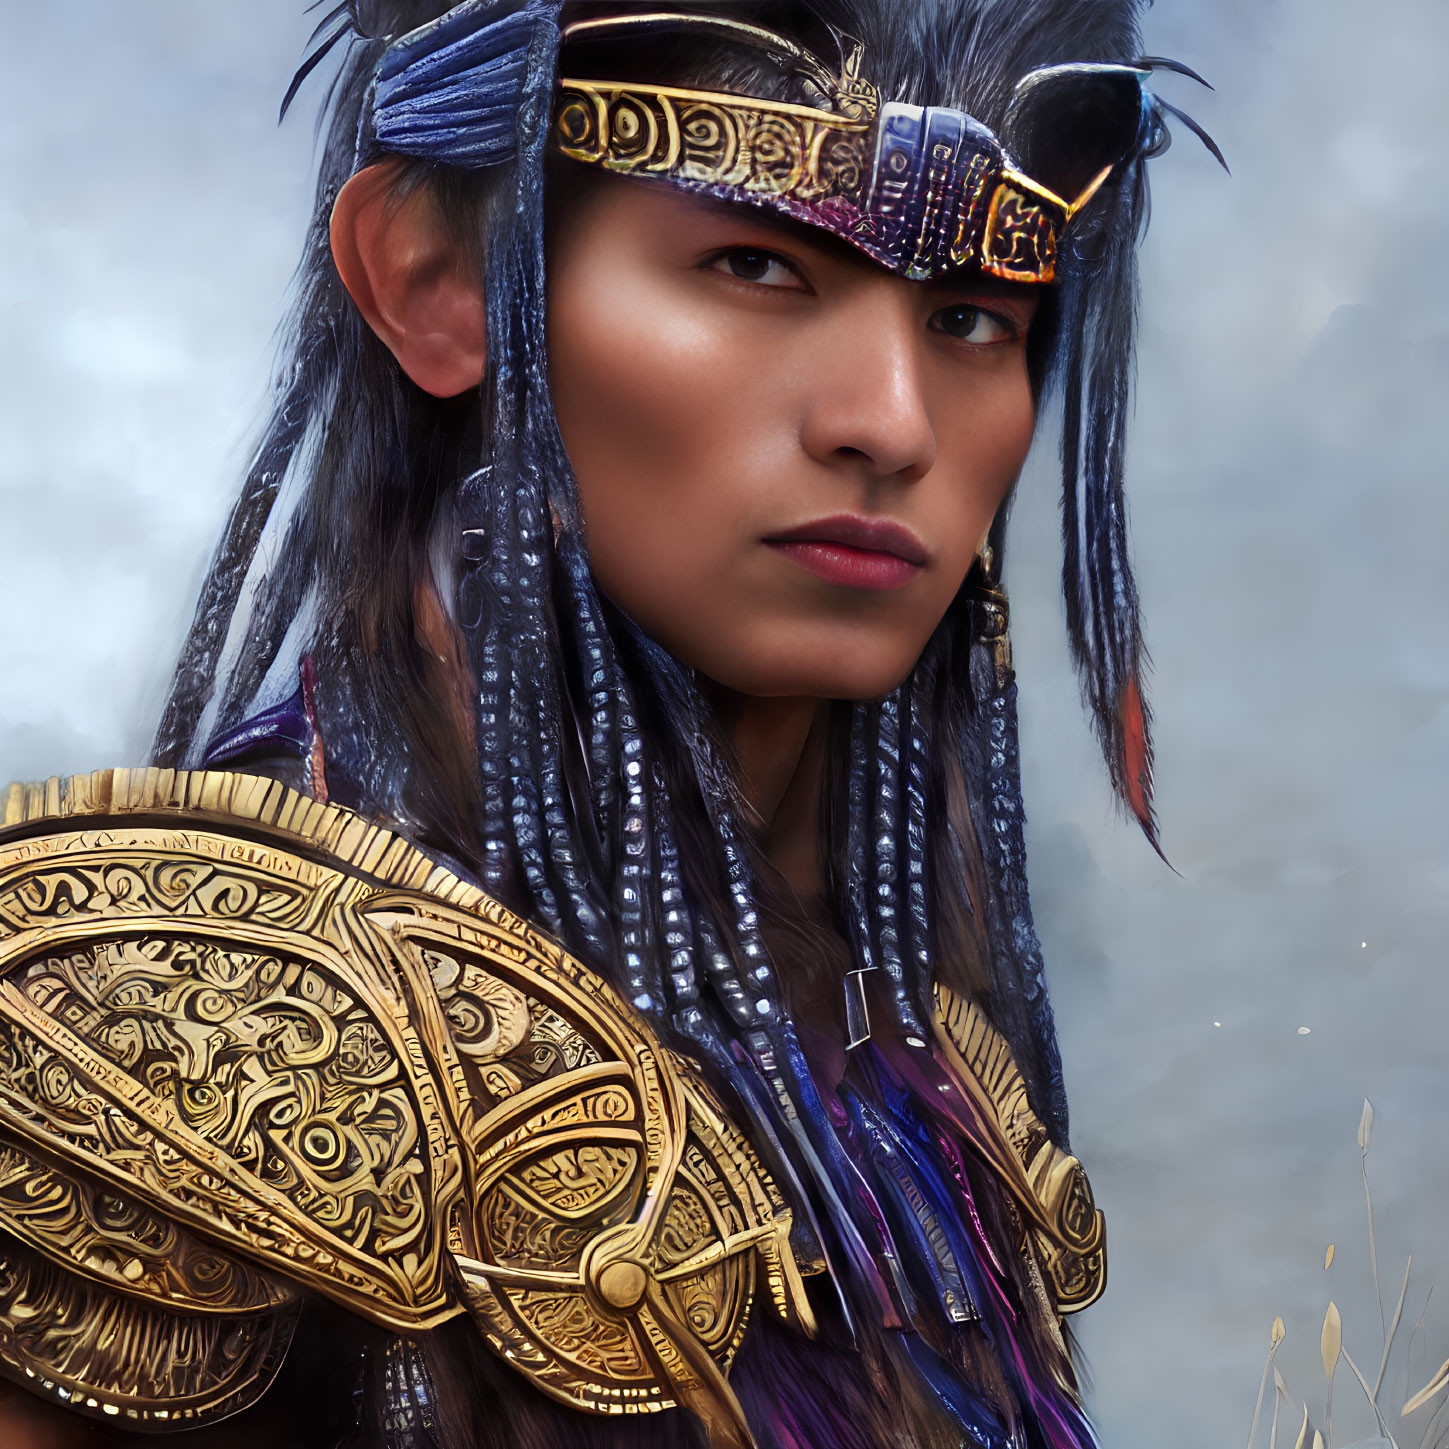 Male warrior digital artwork: blue braided hair, gold armor, feline headband, cloudy sky